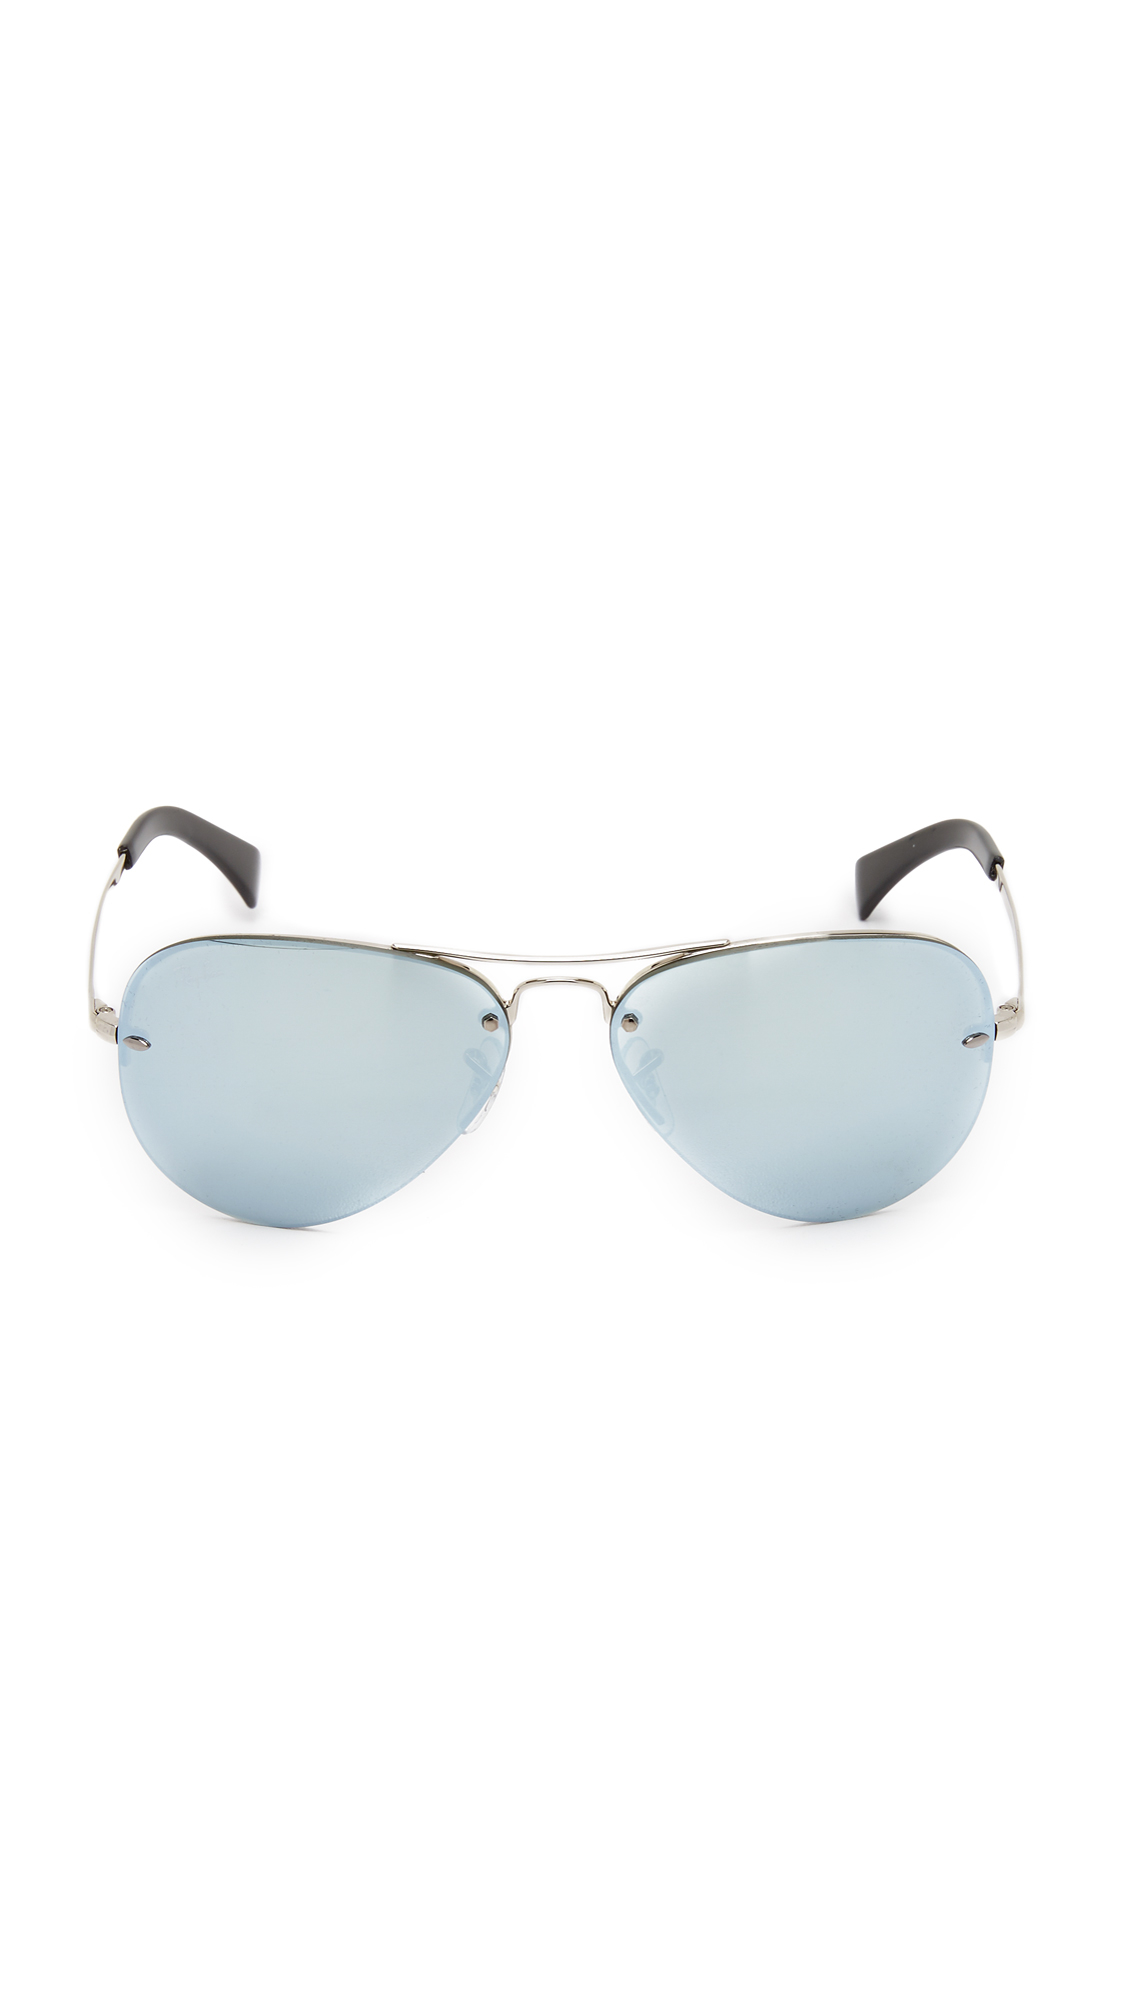 Ray Ban Silver Mirrored Aviator Sunglasses – The Hangout